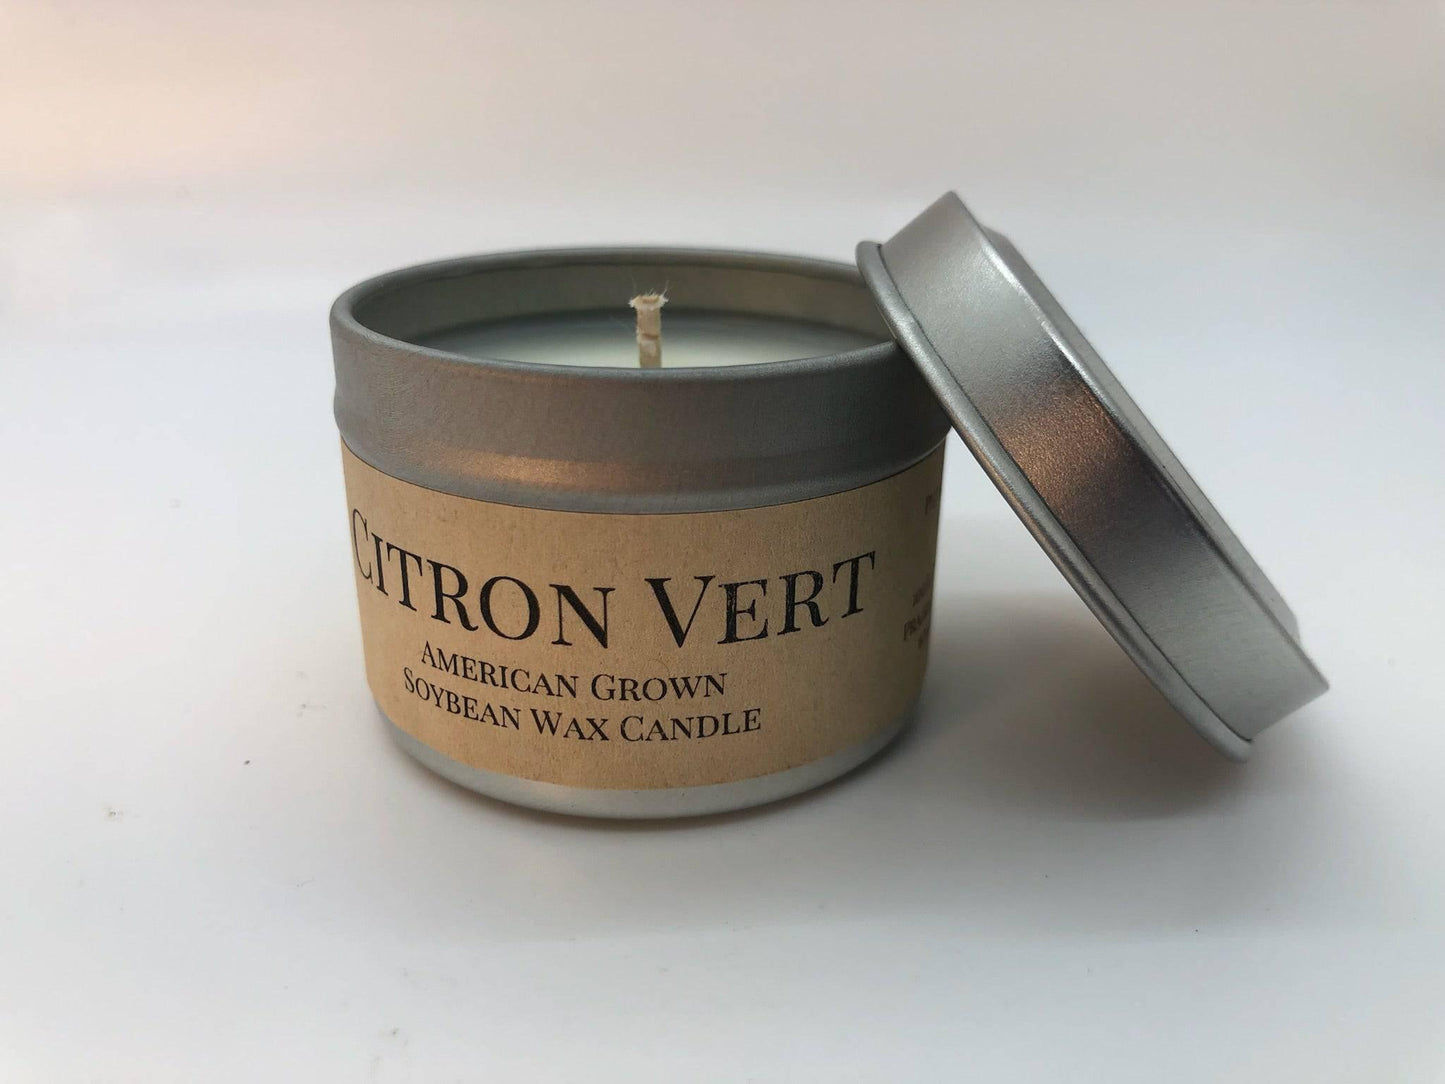 Citron Vert Soy Wax Candle | 2 oz Travel Tin - Prairie Fire Candles